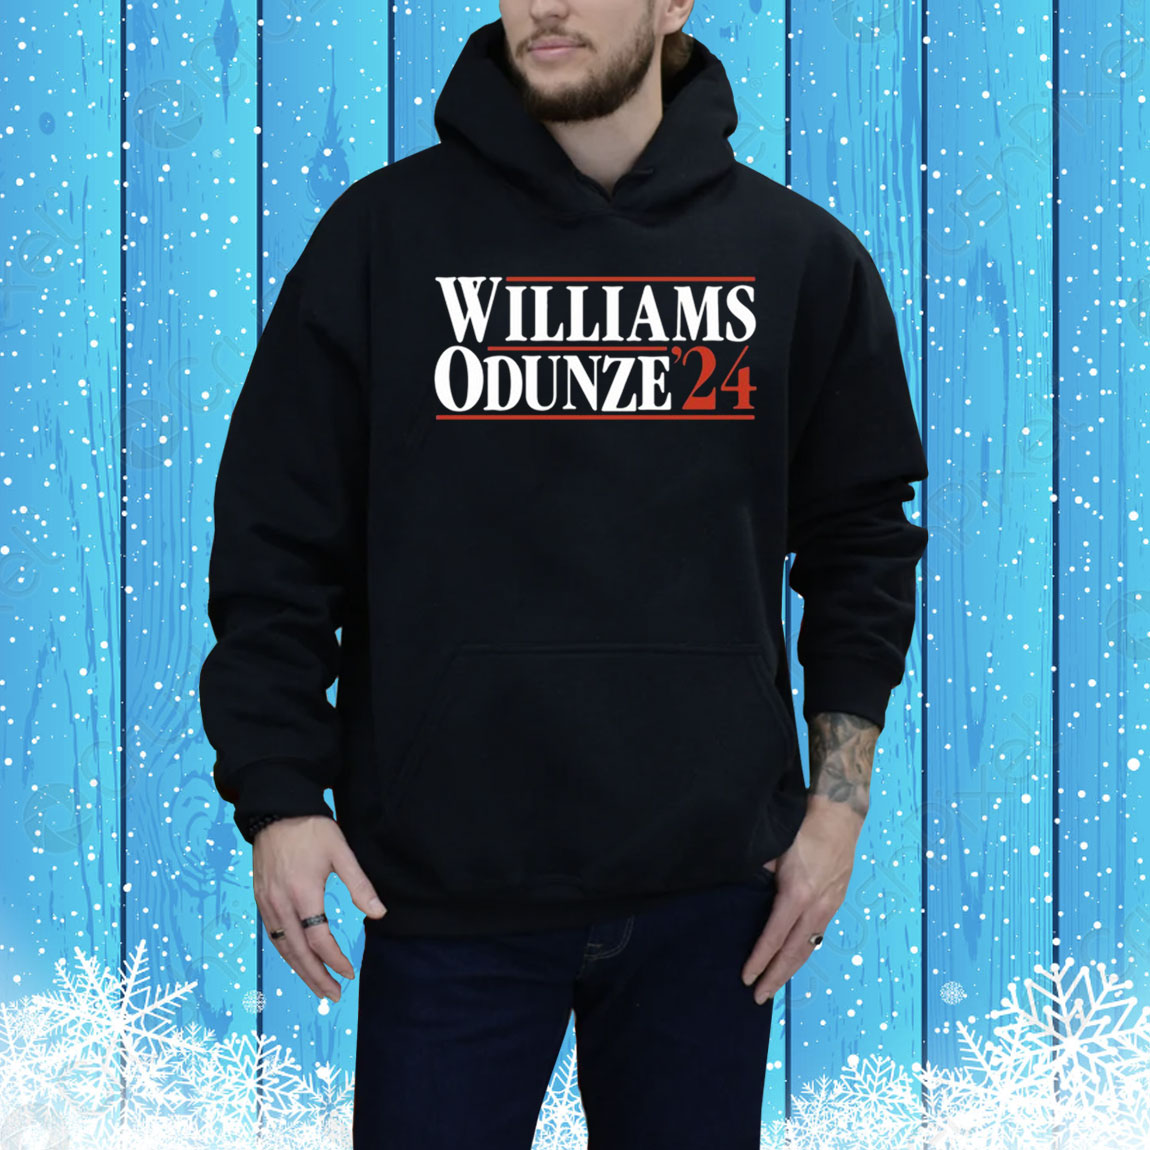 Obvious Shirts Williams Odunze '24 Hoodie Shirt